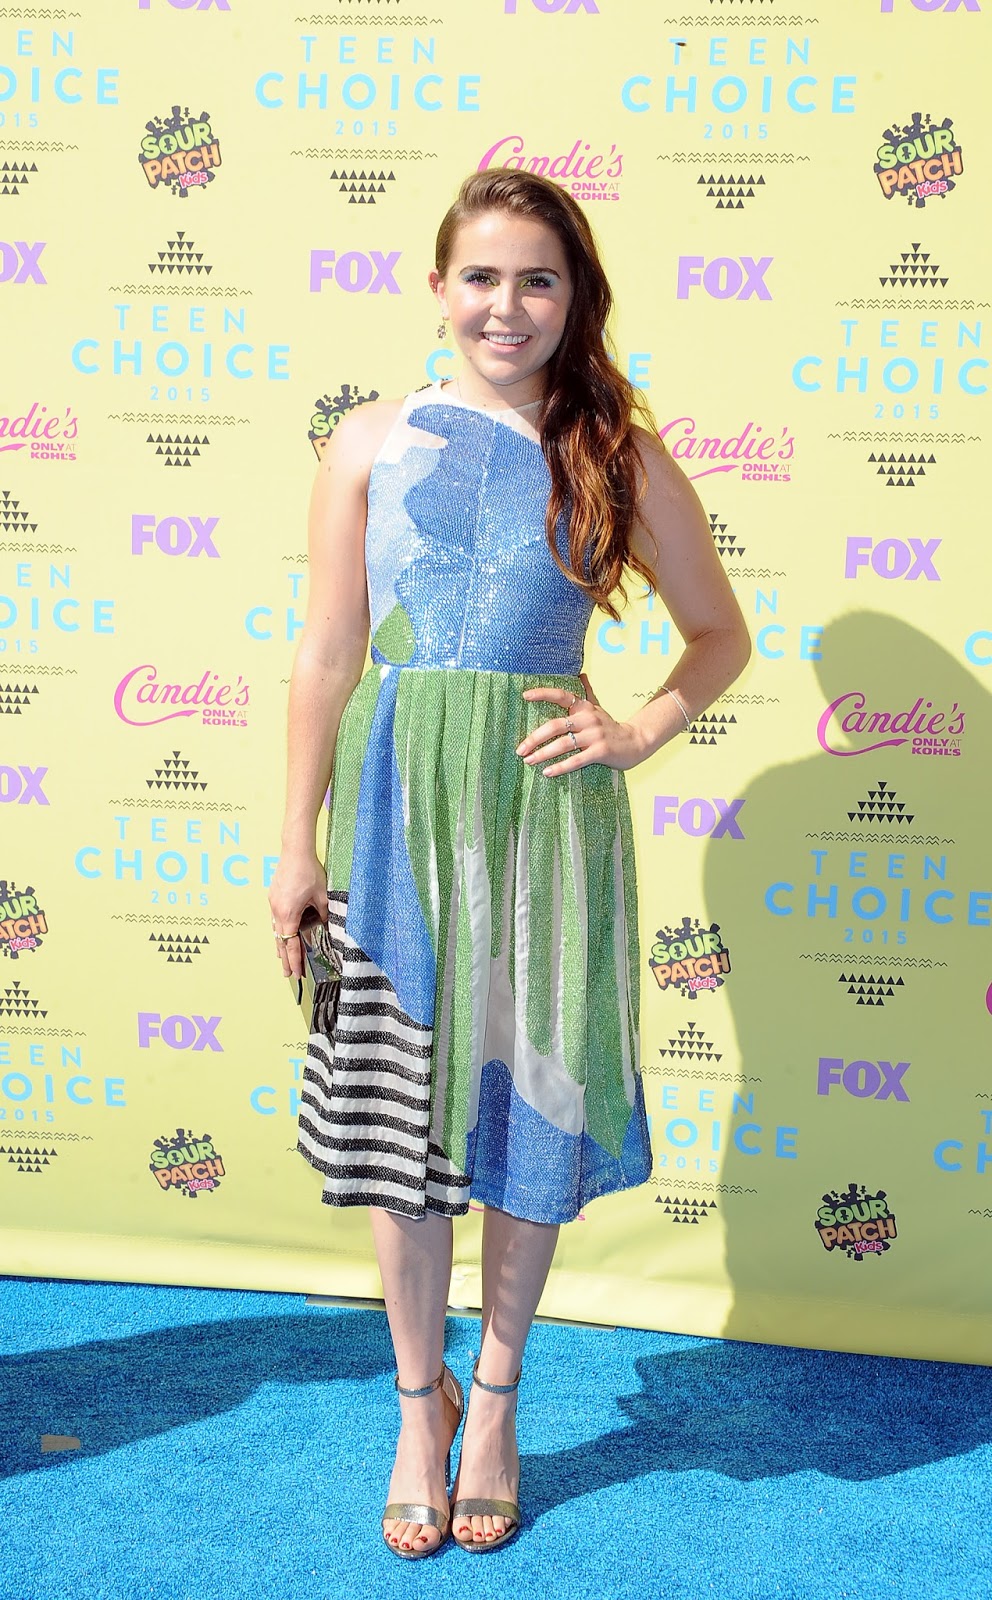 RCN America MA: Mae Whitman Attends Teen Choice Awards 2015